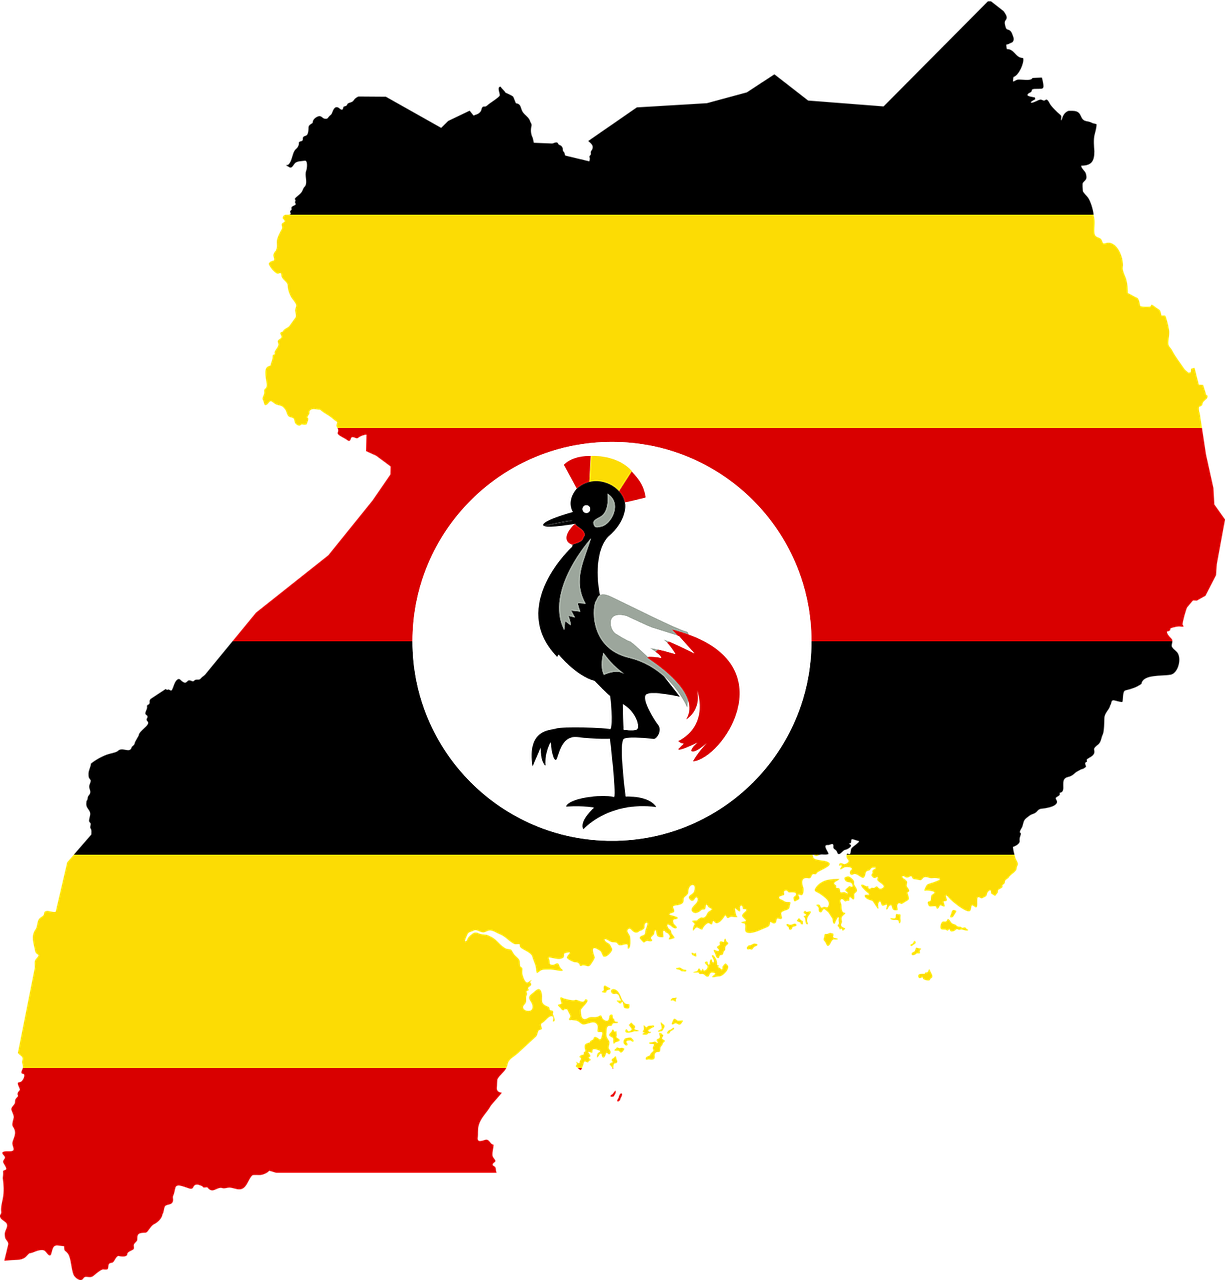 Uganda flag outline (photo credit: Gordon Johnson via pixabay)